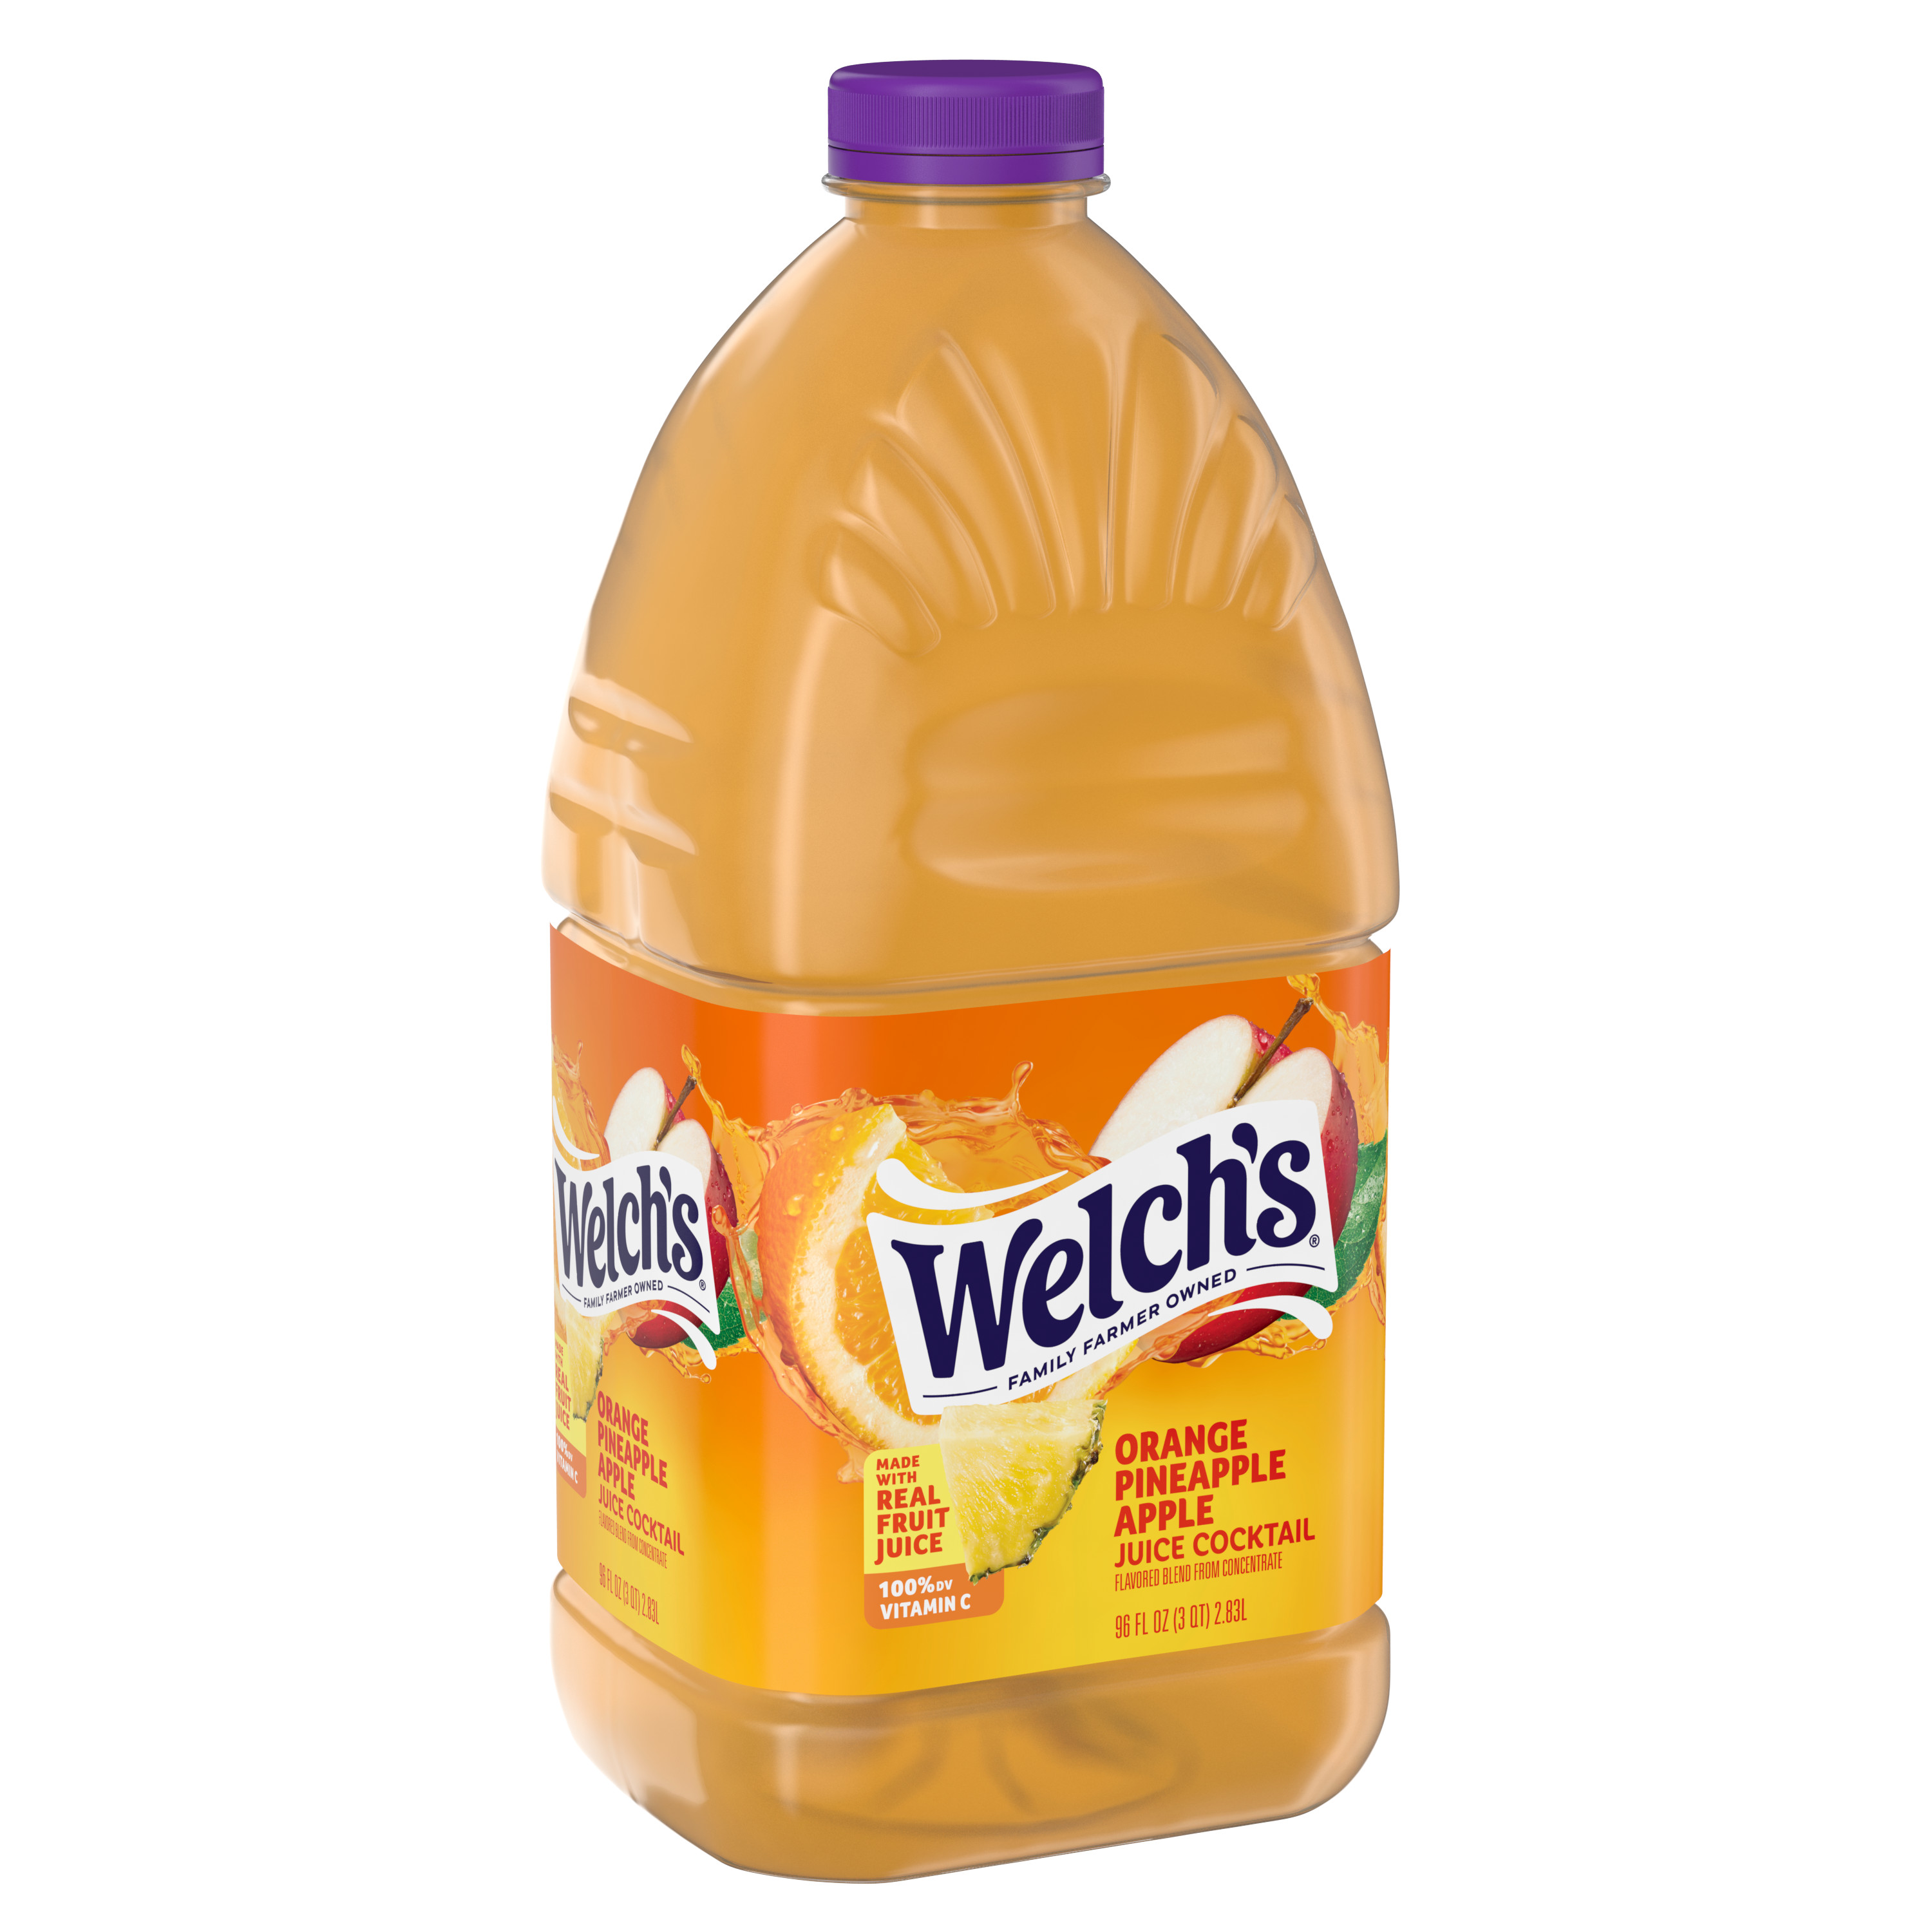 Welch's Orange Pineapple Apple Juice Cocktail, 96 fl oz Bottle - image 3 of 8